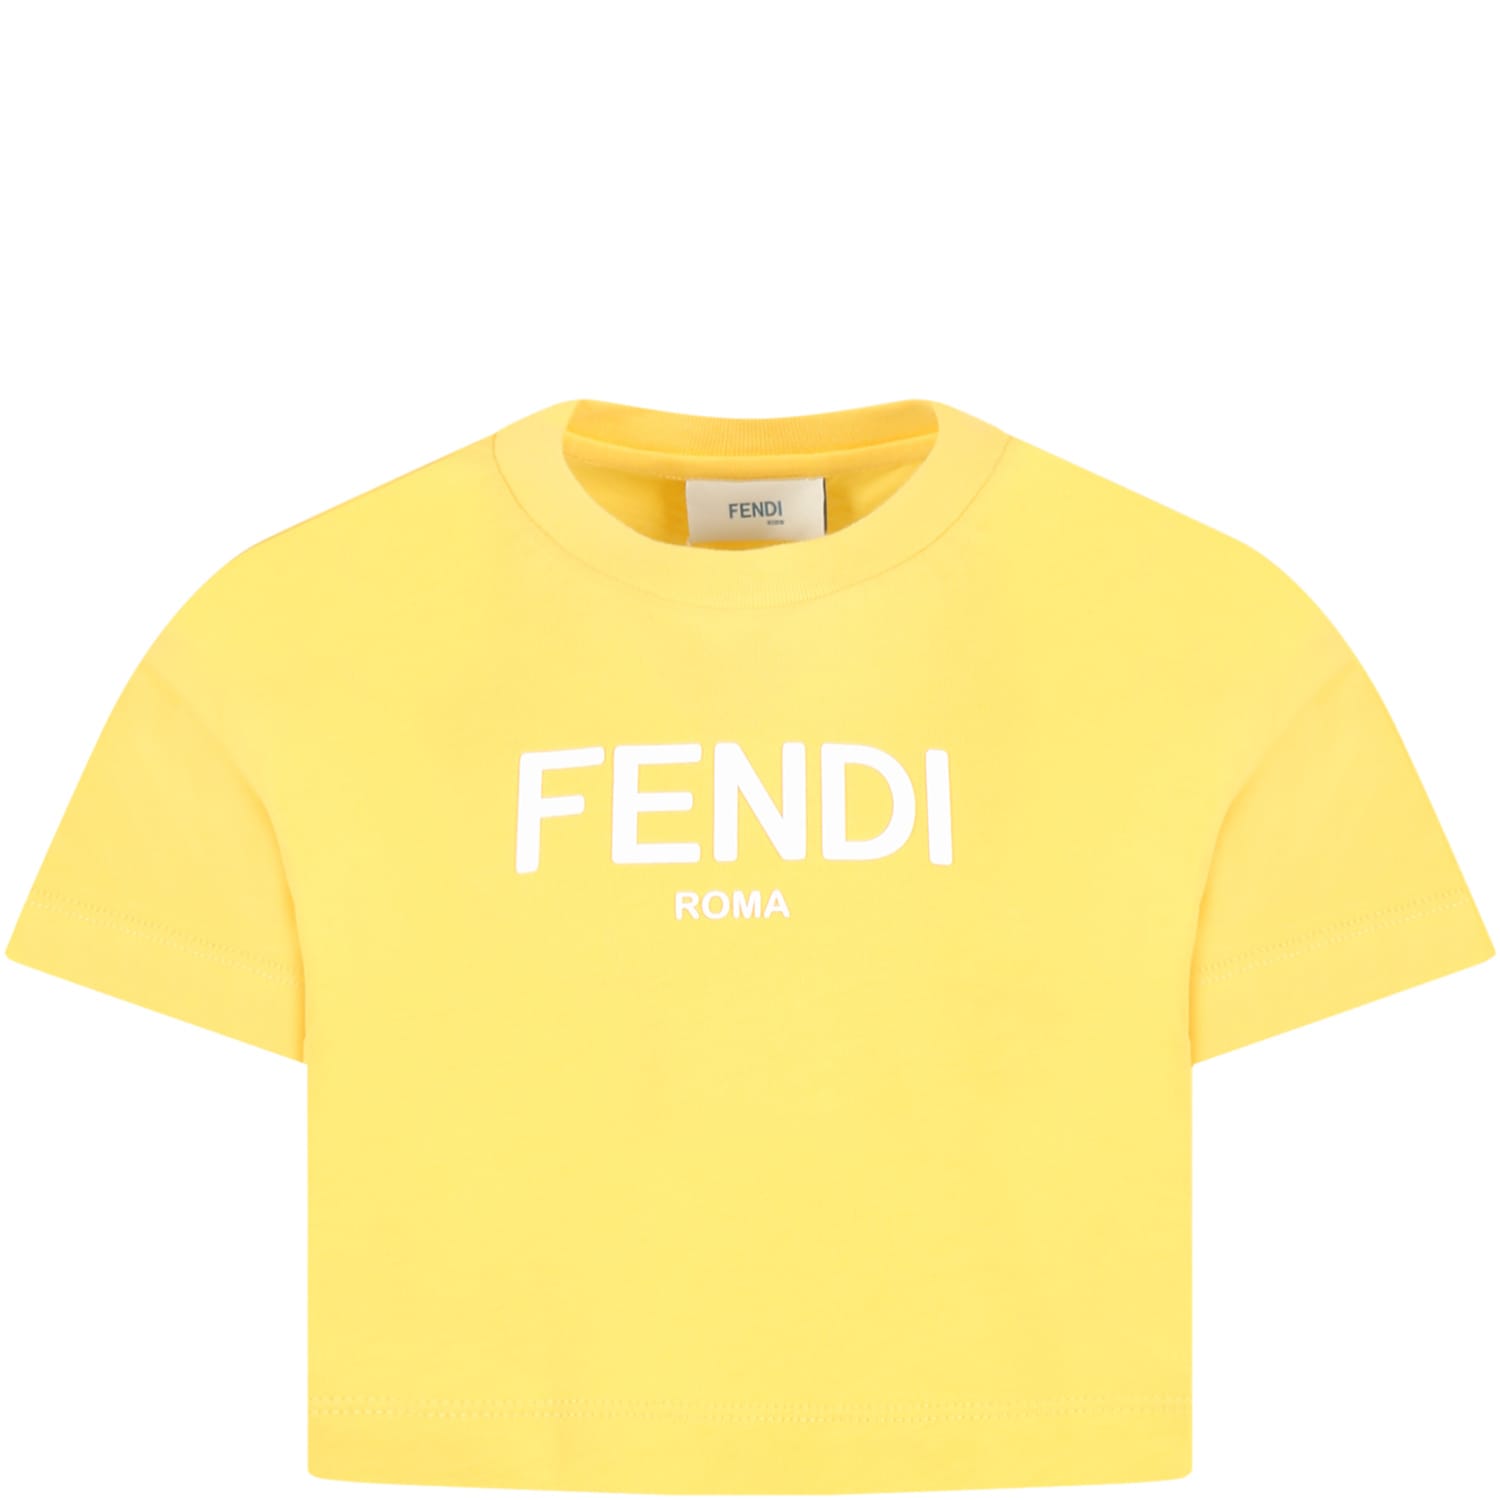 Fendi Yellow T-shirt For Girl With White Logo